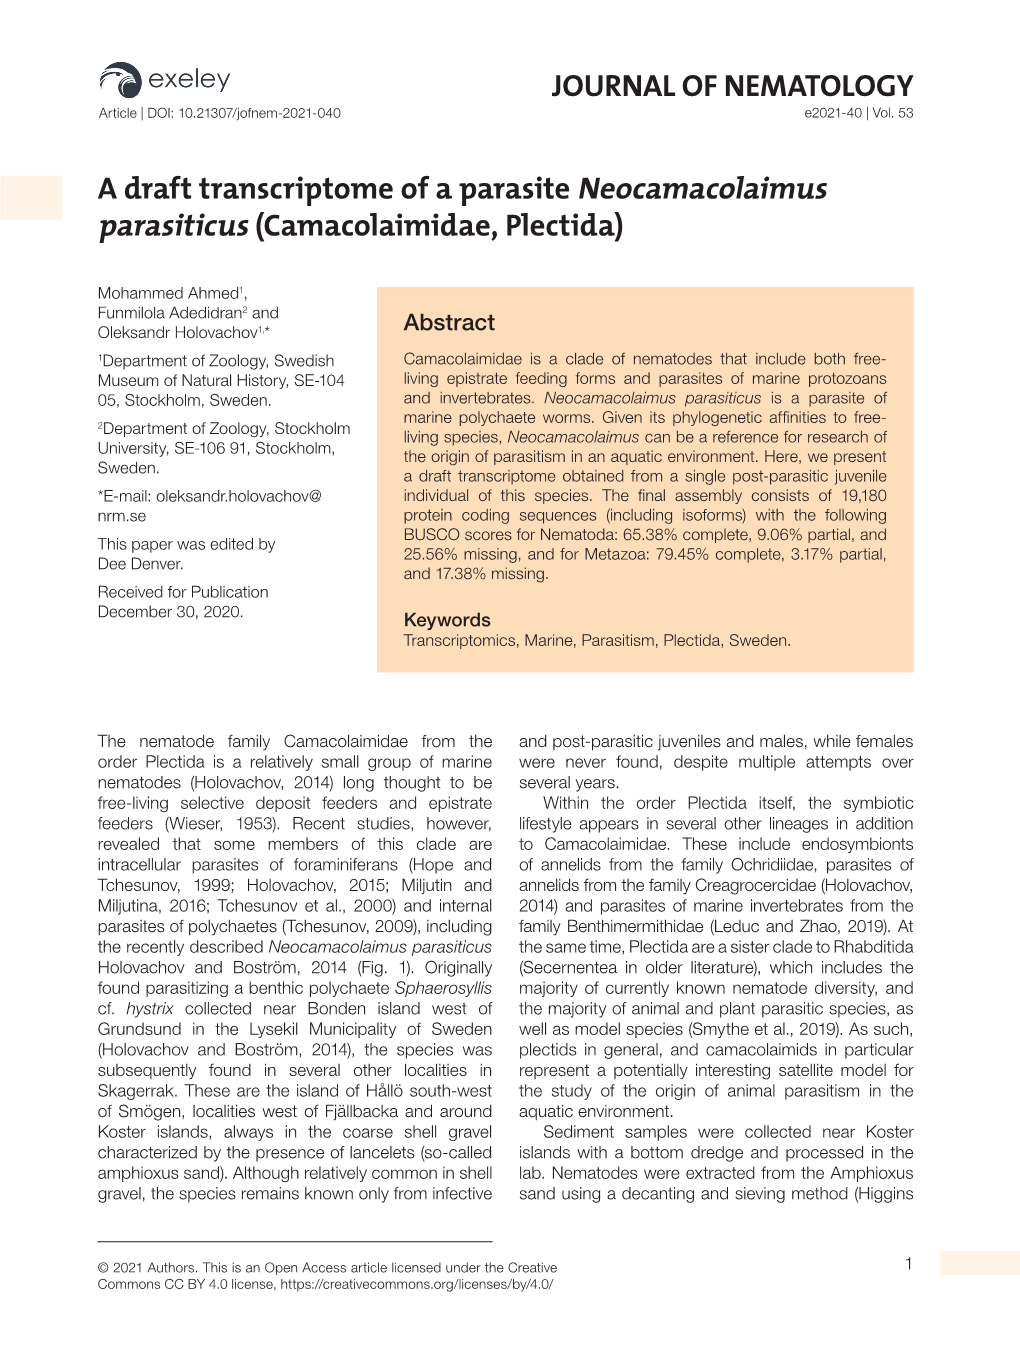 JOURNAL of NEMATOLOGY a Draft Transcriptome of a Parasite